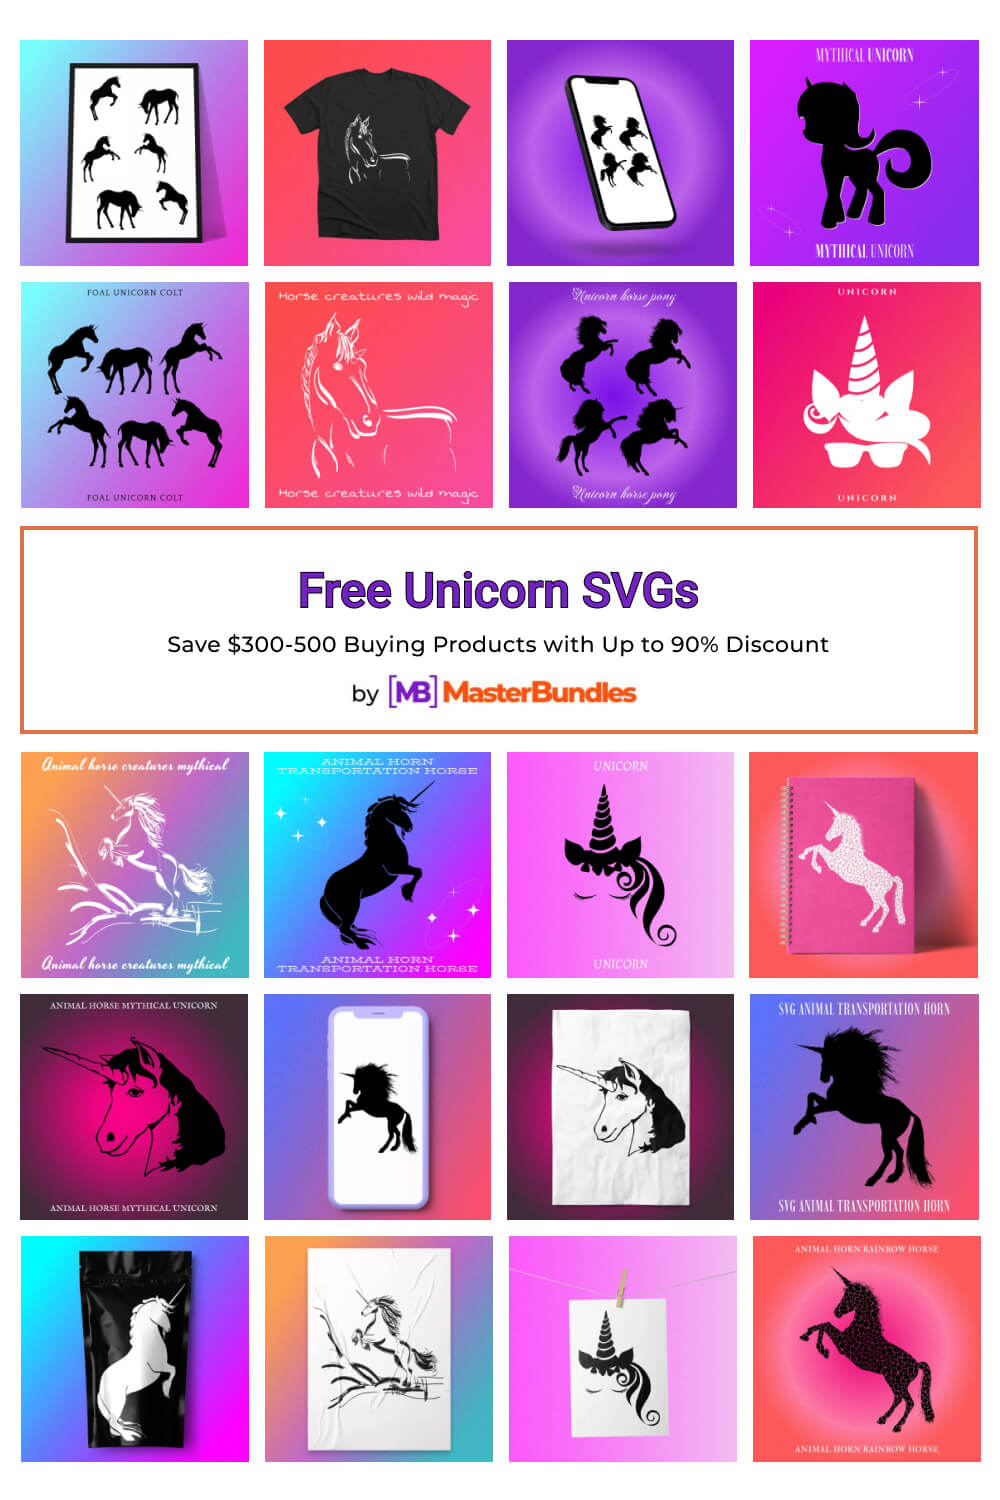 free unicorn svgs pinterest image.